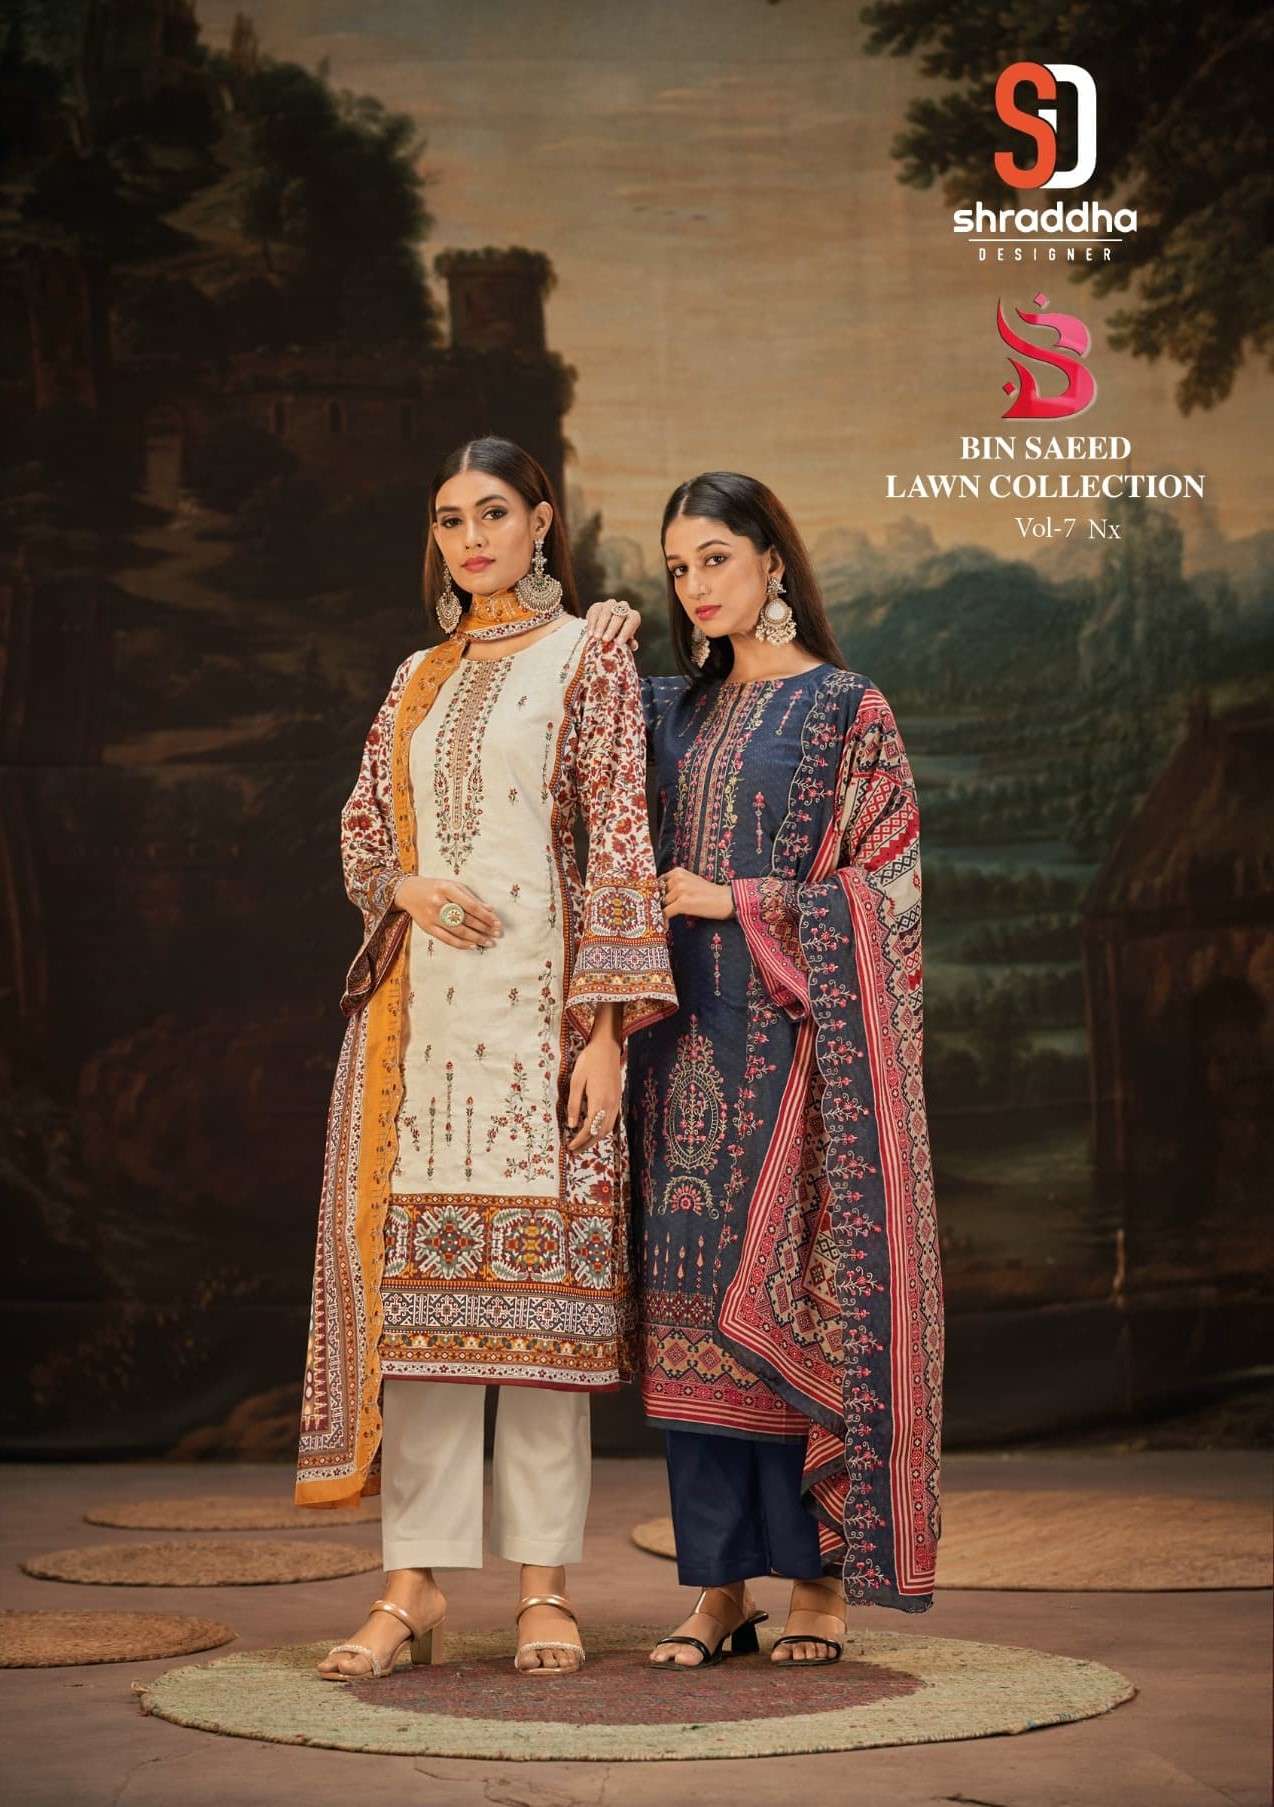 shraddha designer bin saeed vol-7 nx exclusive pure cotton printed salwar kameez set wholesaler